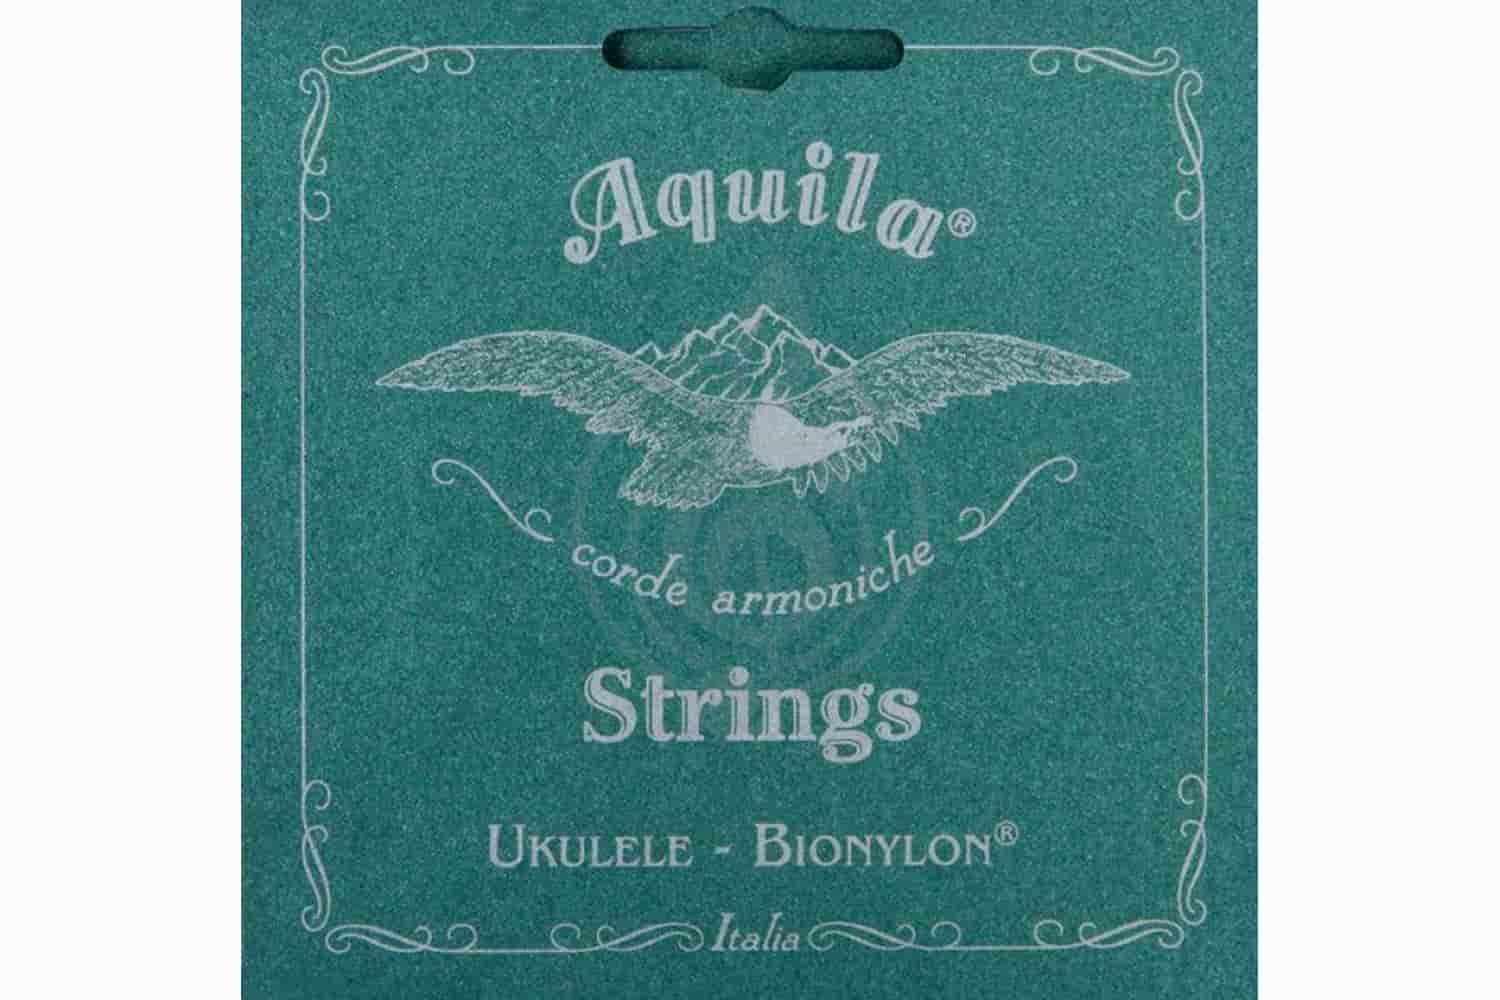 Струны для укулеле тенор Струны для укулеле тенор Aquila AQUILA 16U SINGLE - Струна одиночная для укулеле тенор 16U - фото 1